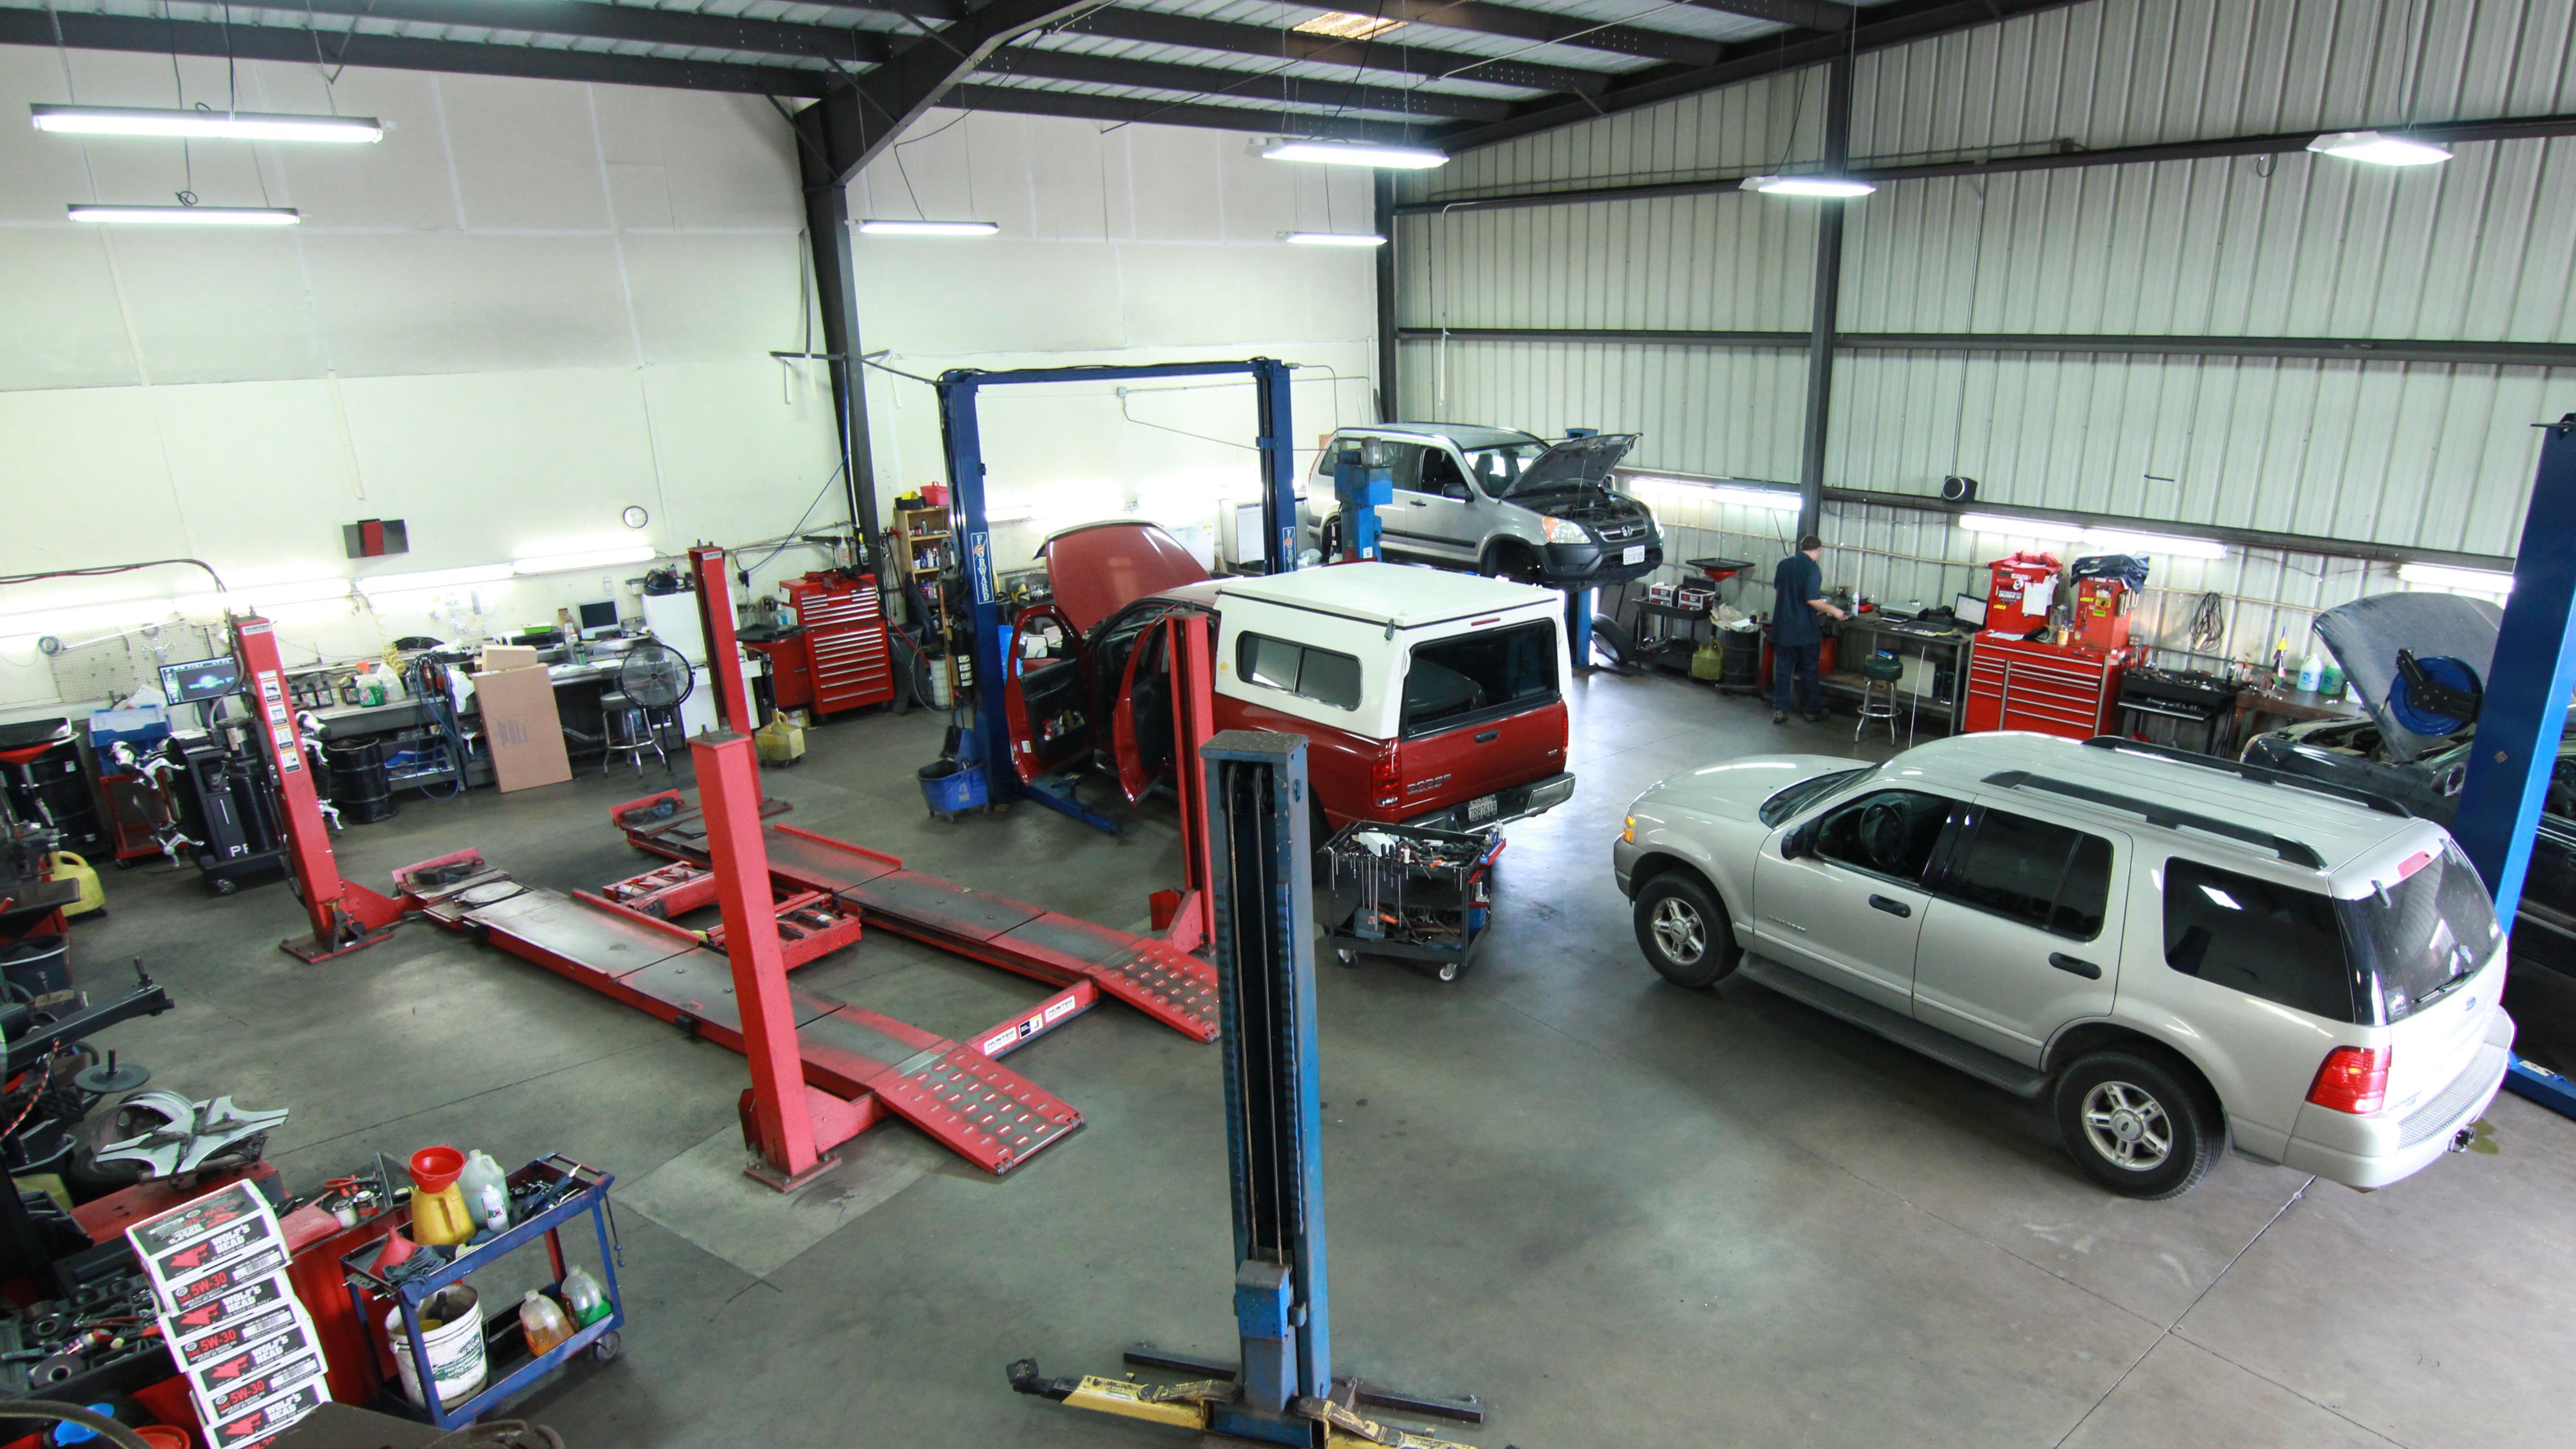 Carlsbad Auto Service Inc./Auto Repair/Service                                                                                                                                                                                     